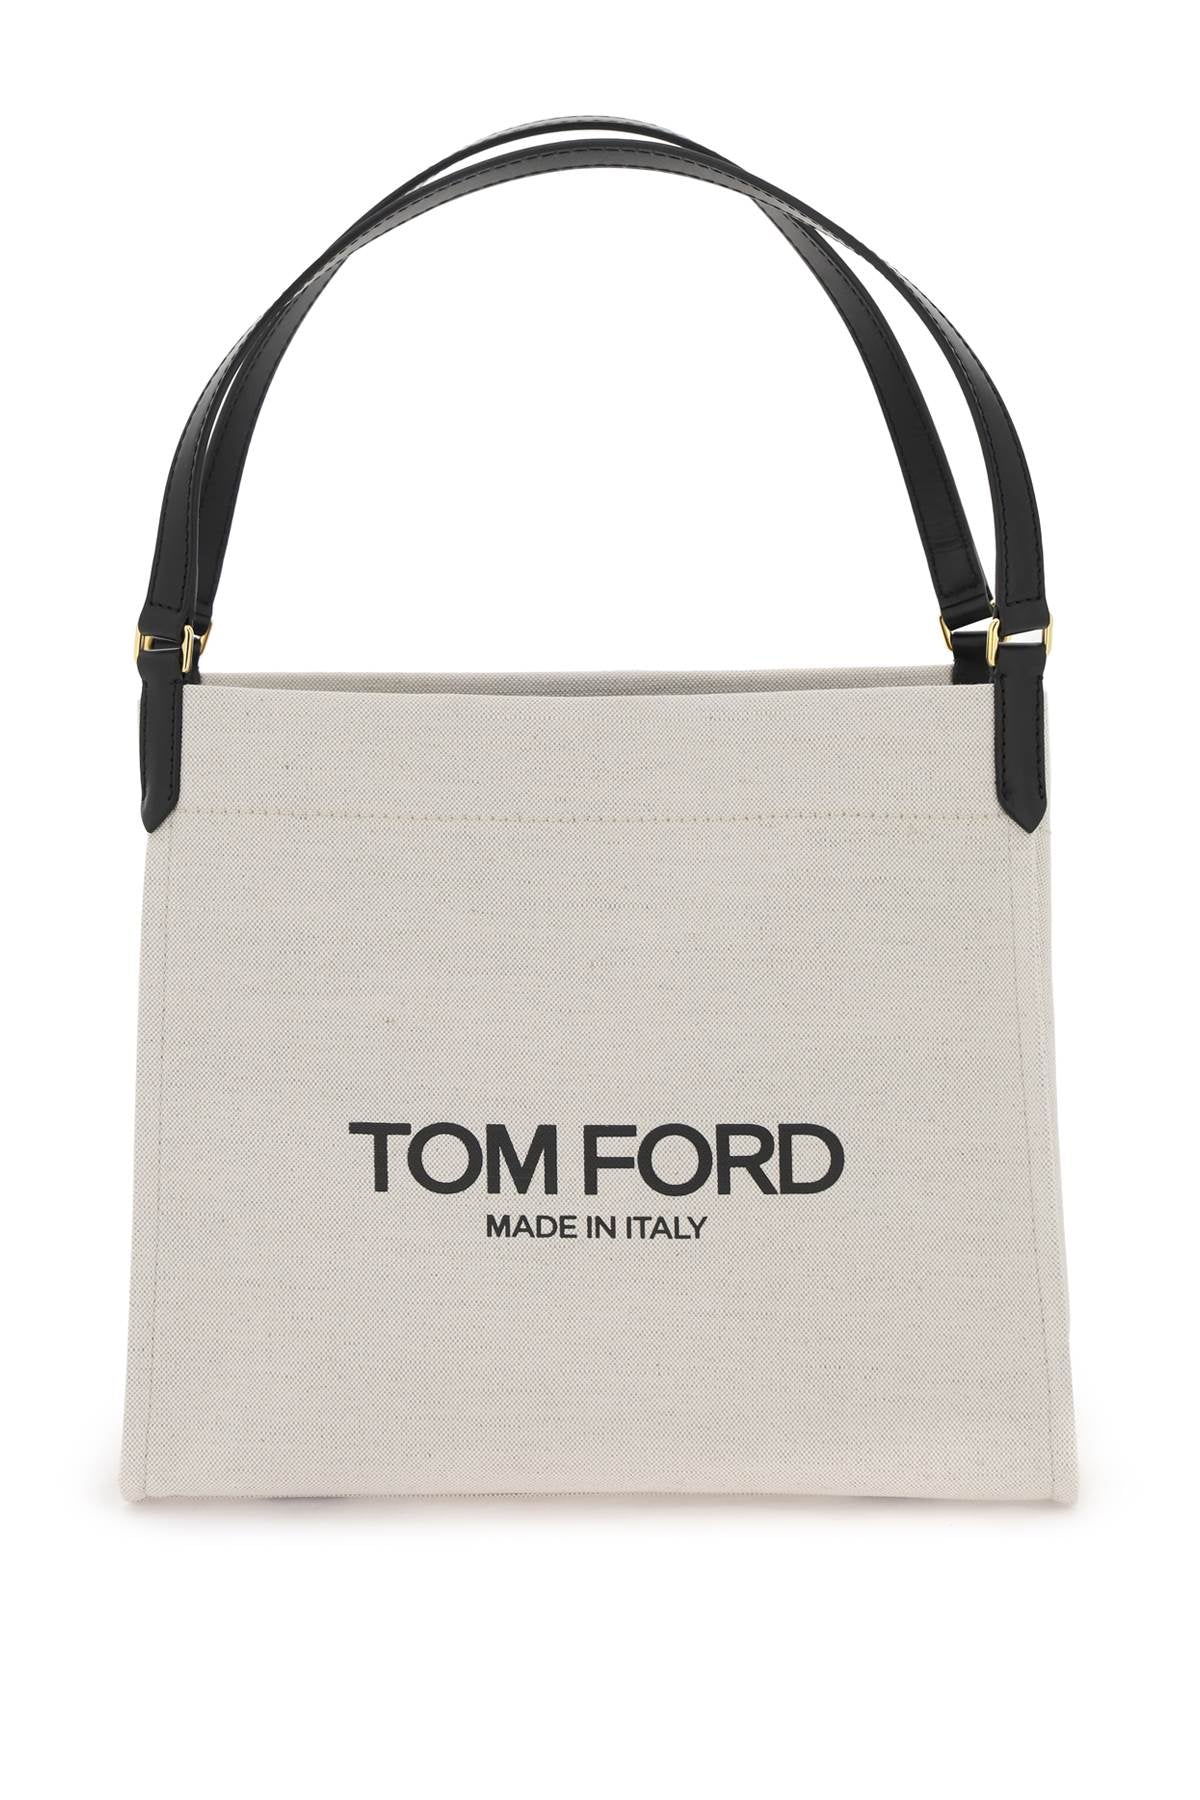 Tom Ford Amalfi Cotton Canvas Tote Bag Cream